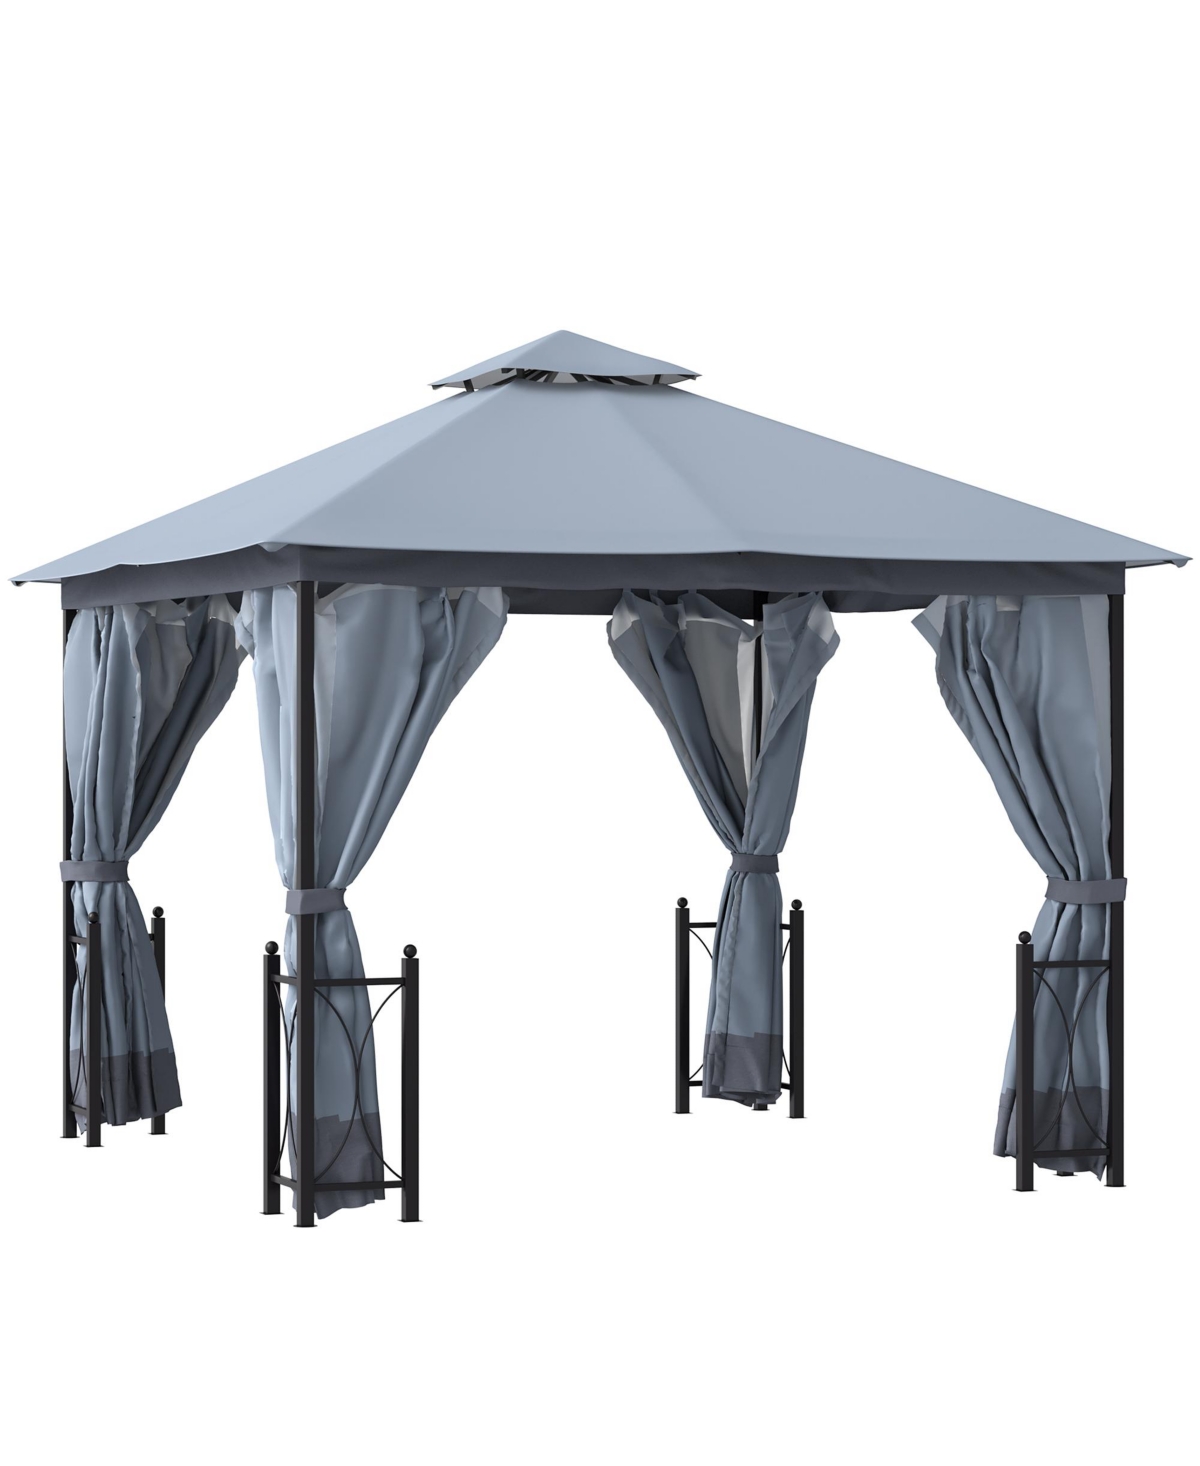 13' x 11' Patio Gazebo, Mesh, Curtains, Fancy Steel Frame, 2 Tier Roof, Outdoor Canopy Shelter, Garden Sun Shade Tent, Grey - Grey